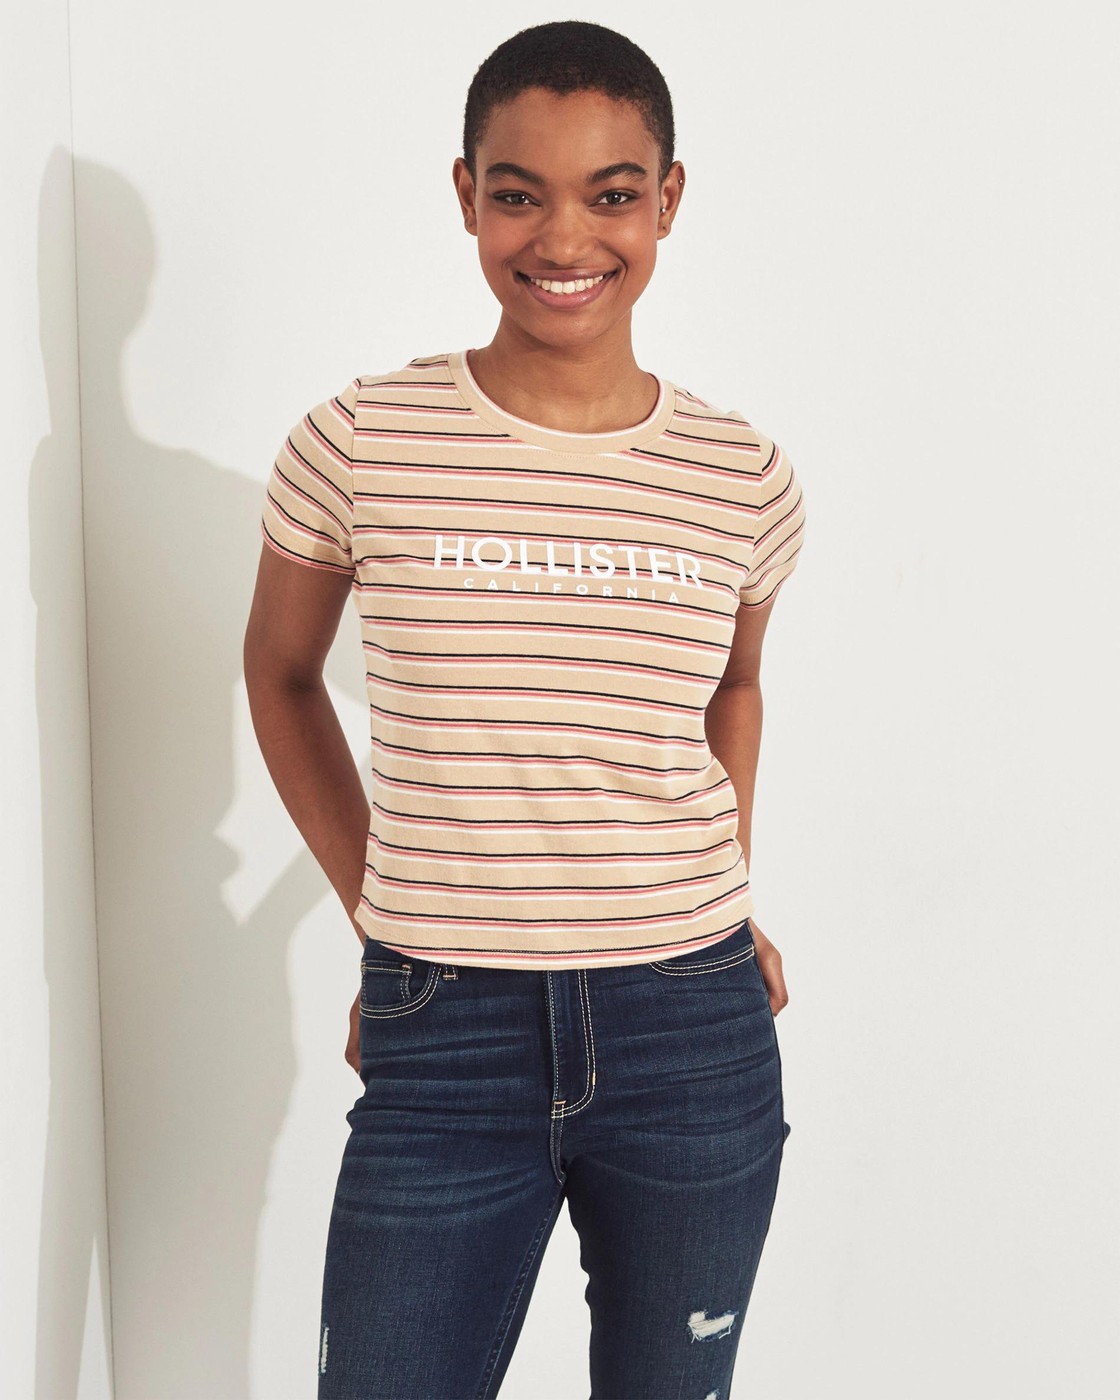 Бежевая футболка - женская футболка Hollister